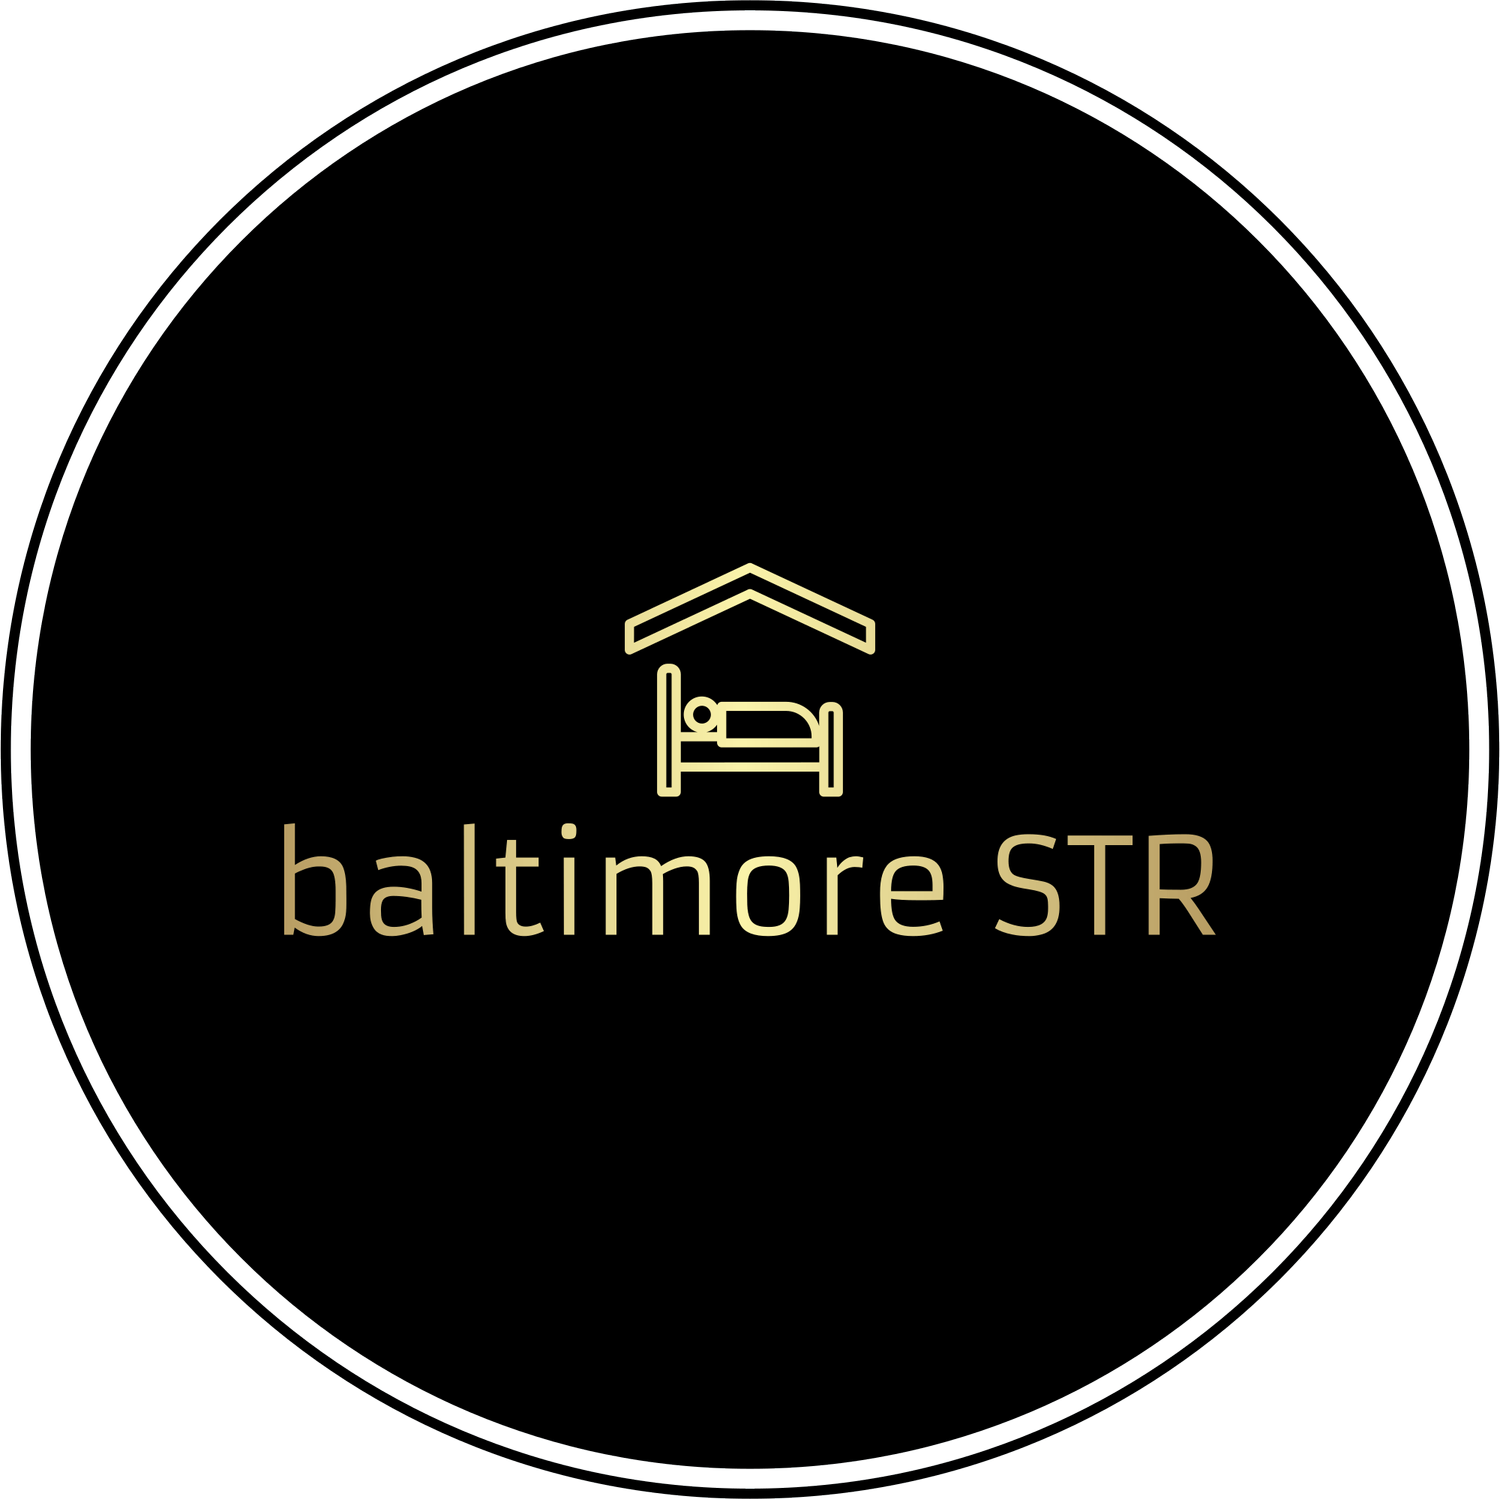 Baltimore STR - Direct Listings for Short-term Rentals